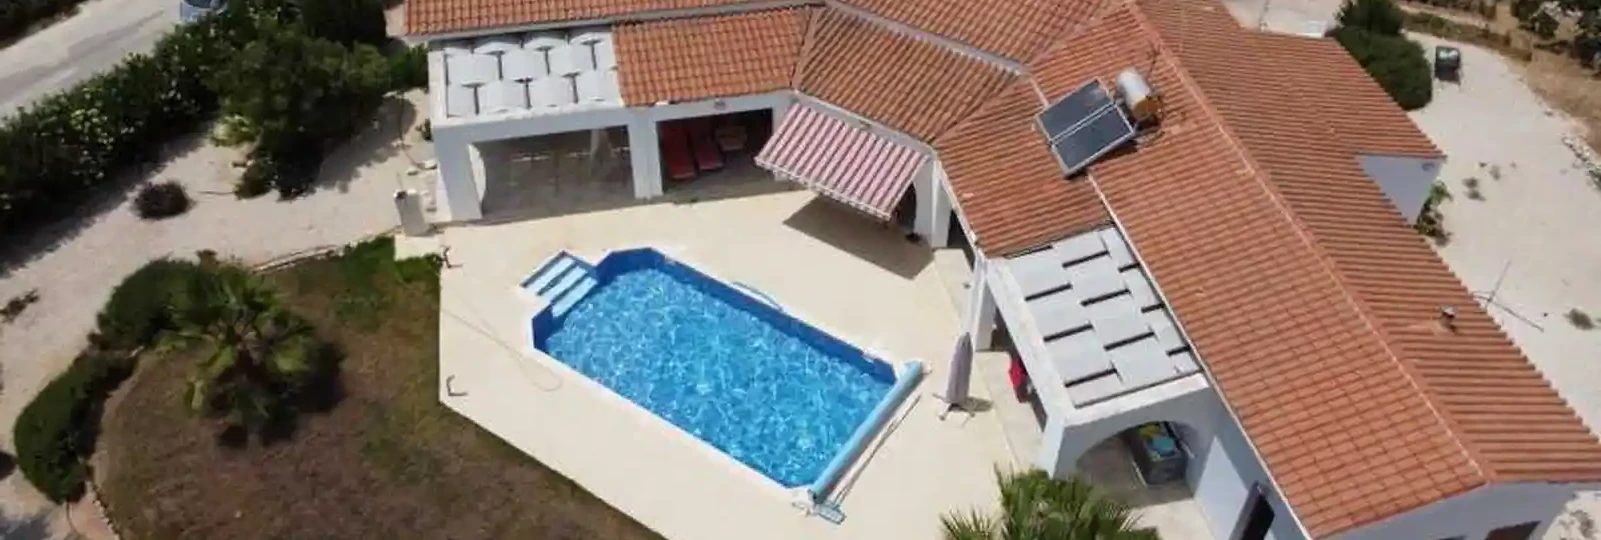 4-bedroom villa fоr sаle €595.000, image 1